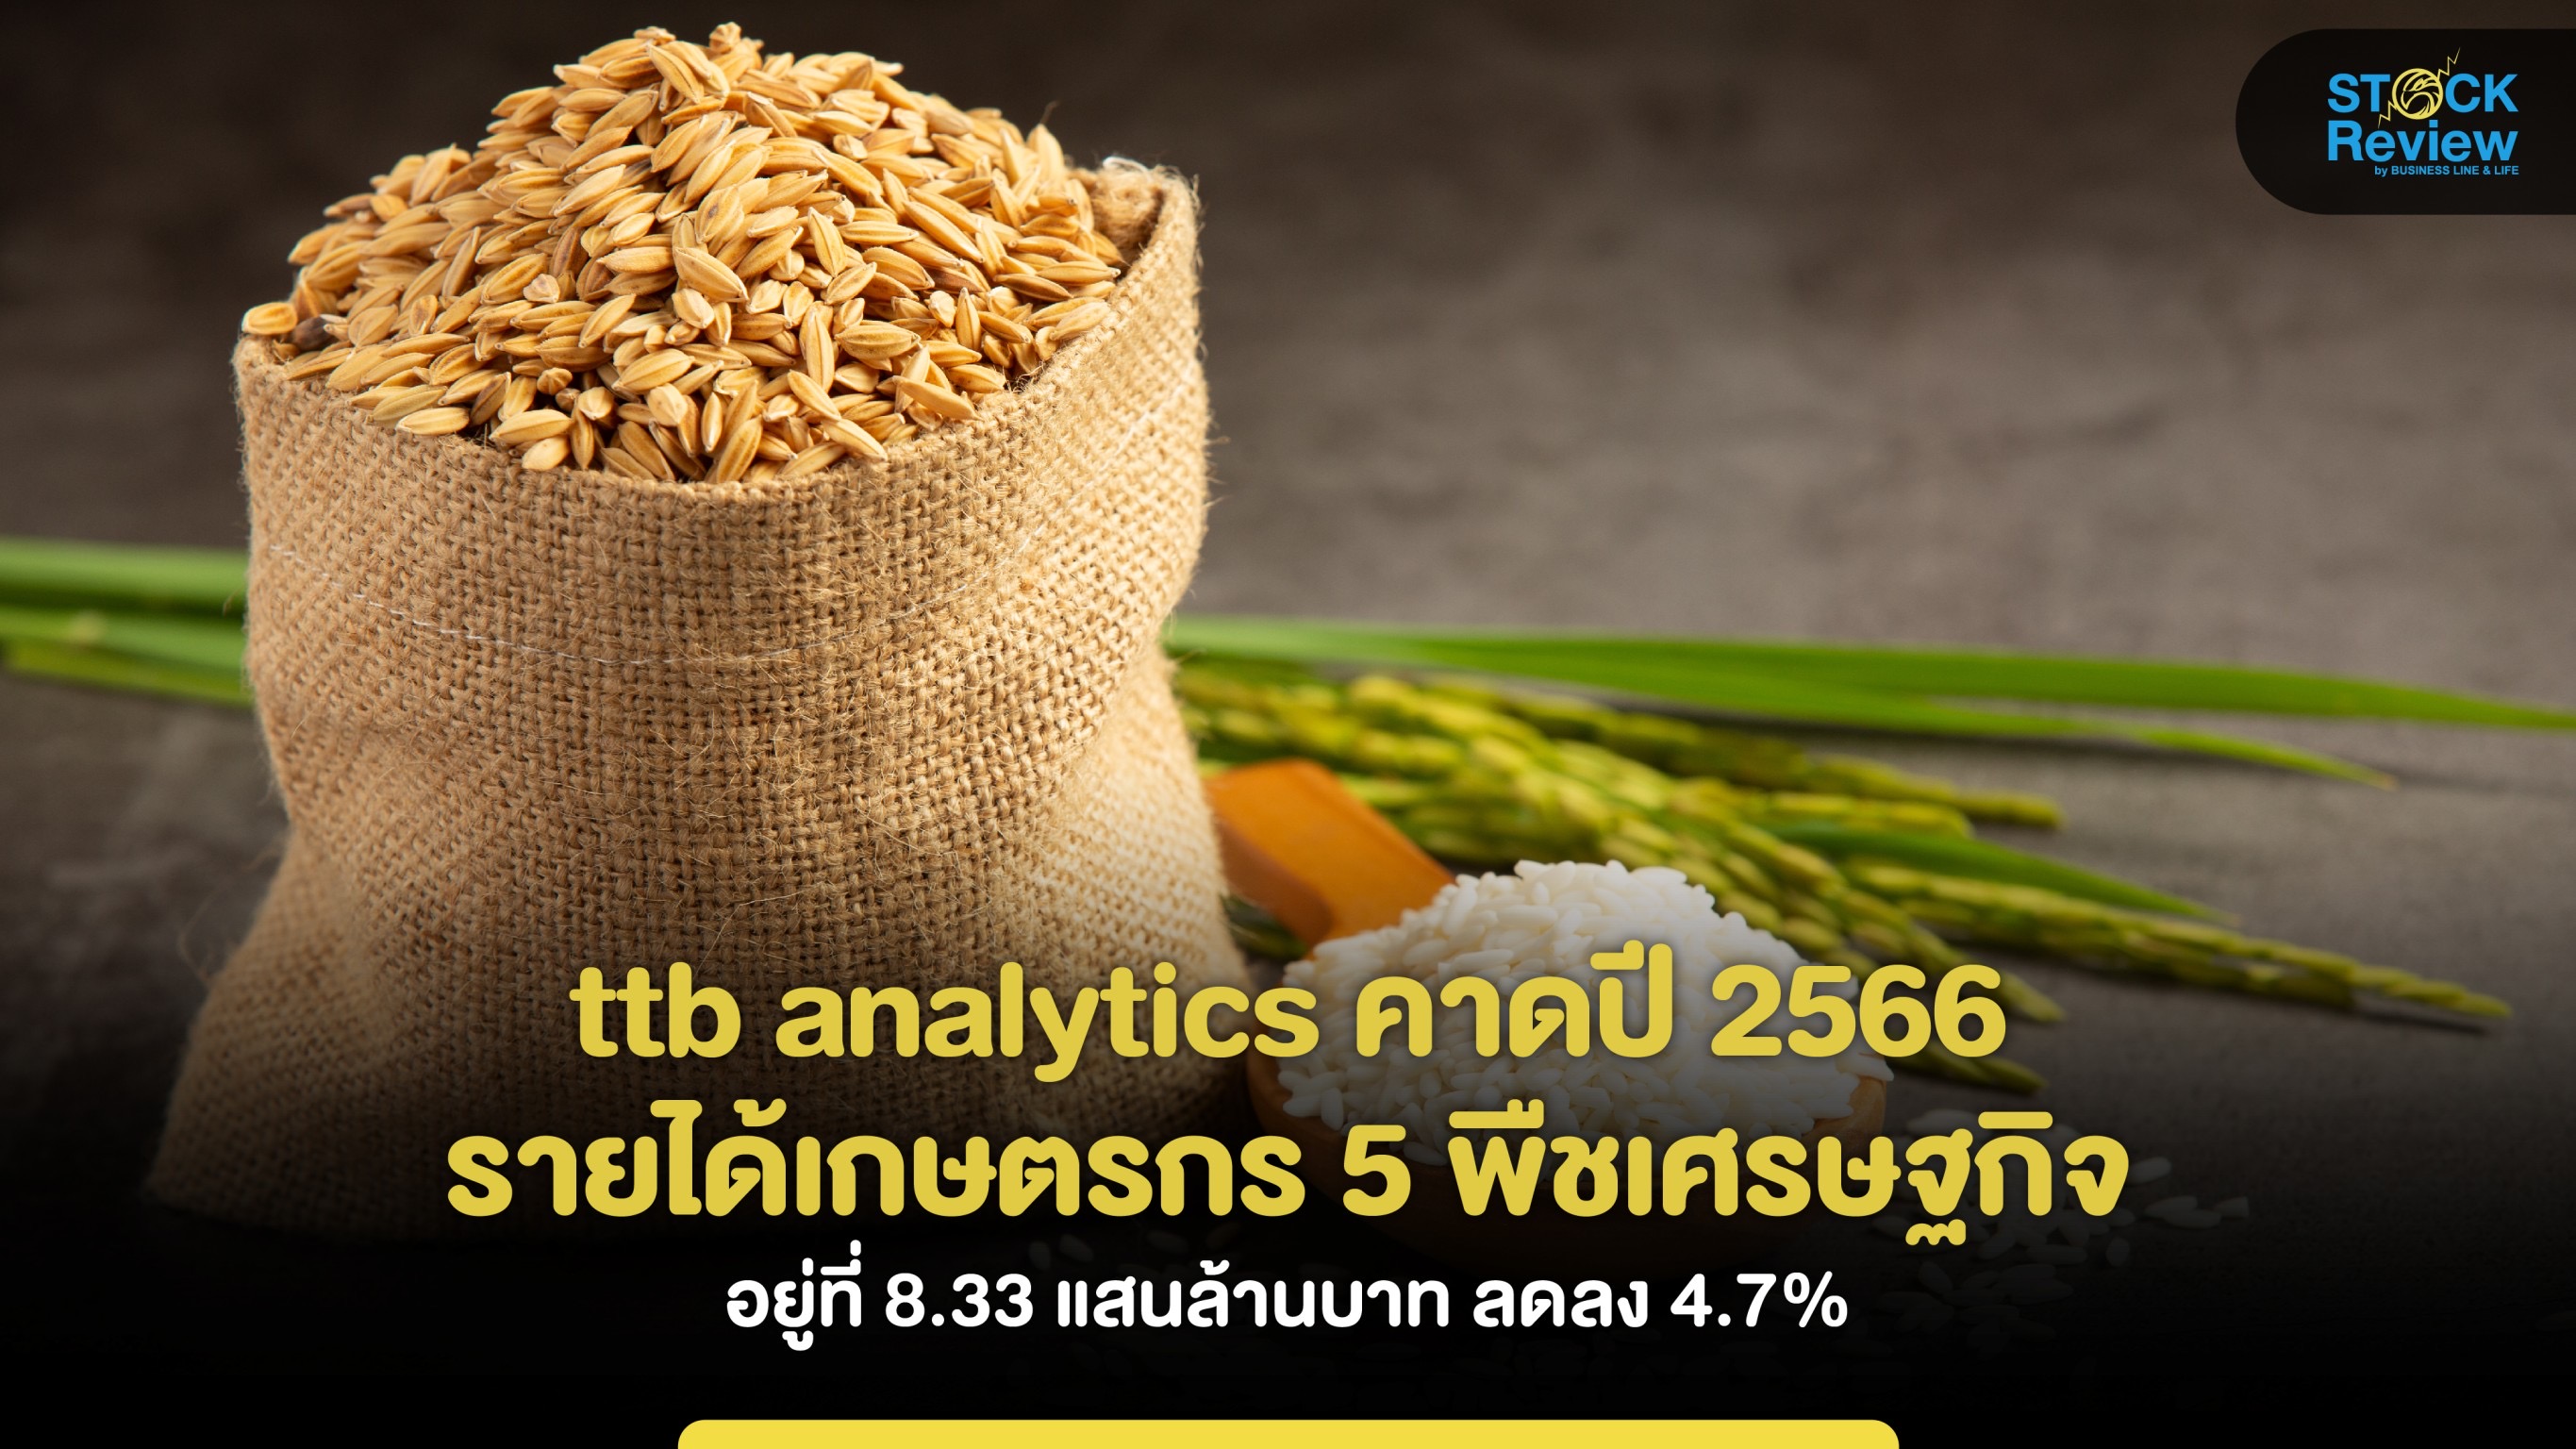 ttb analytics คาดปี 2566 รายได้พืชหลักเศรษฐกิจไทย ลดลง 4.7%